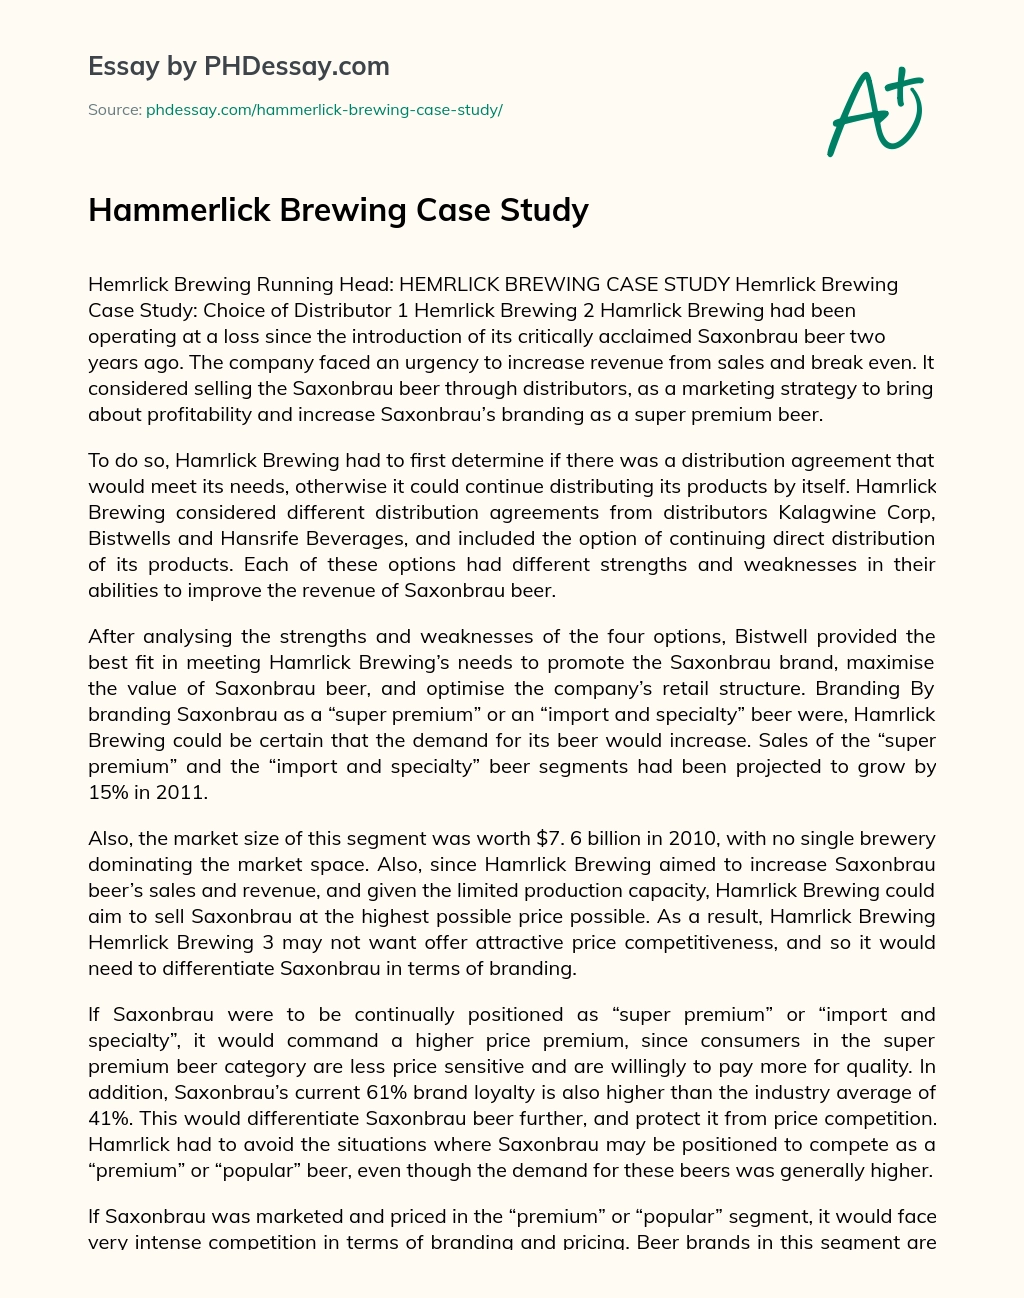 Hammerlick Brewing Case Study essay